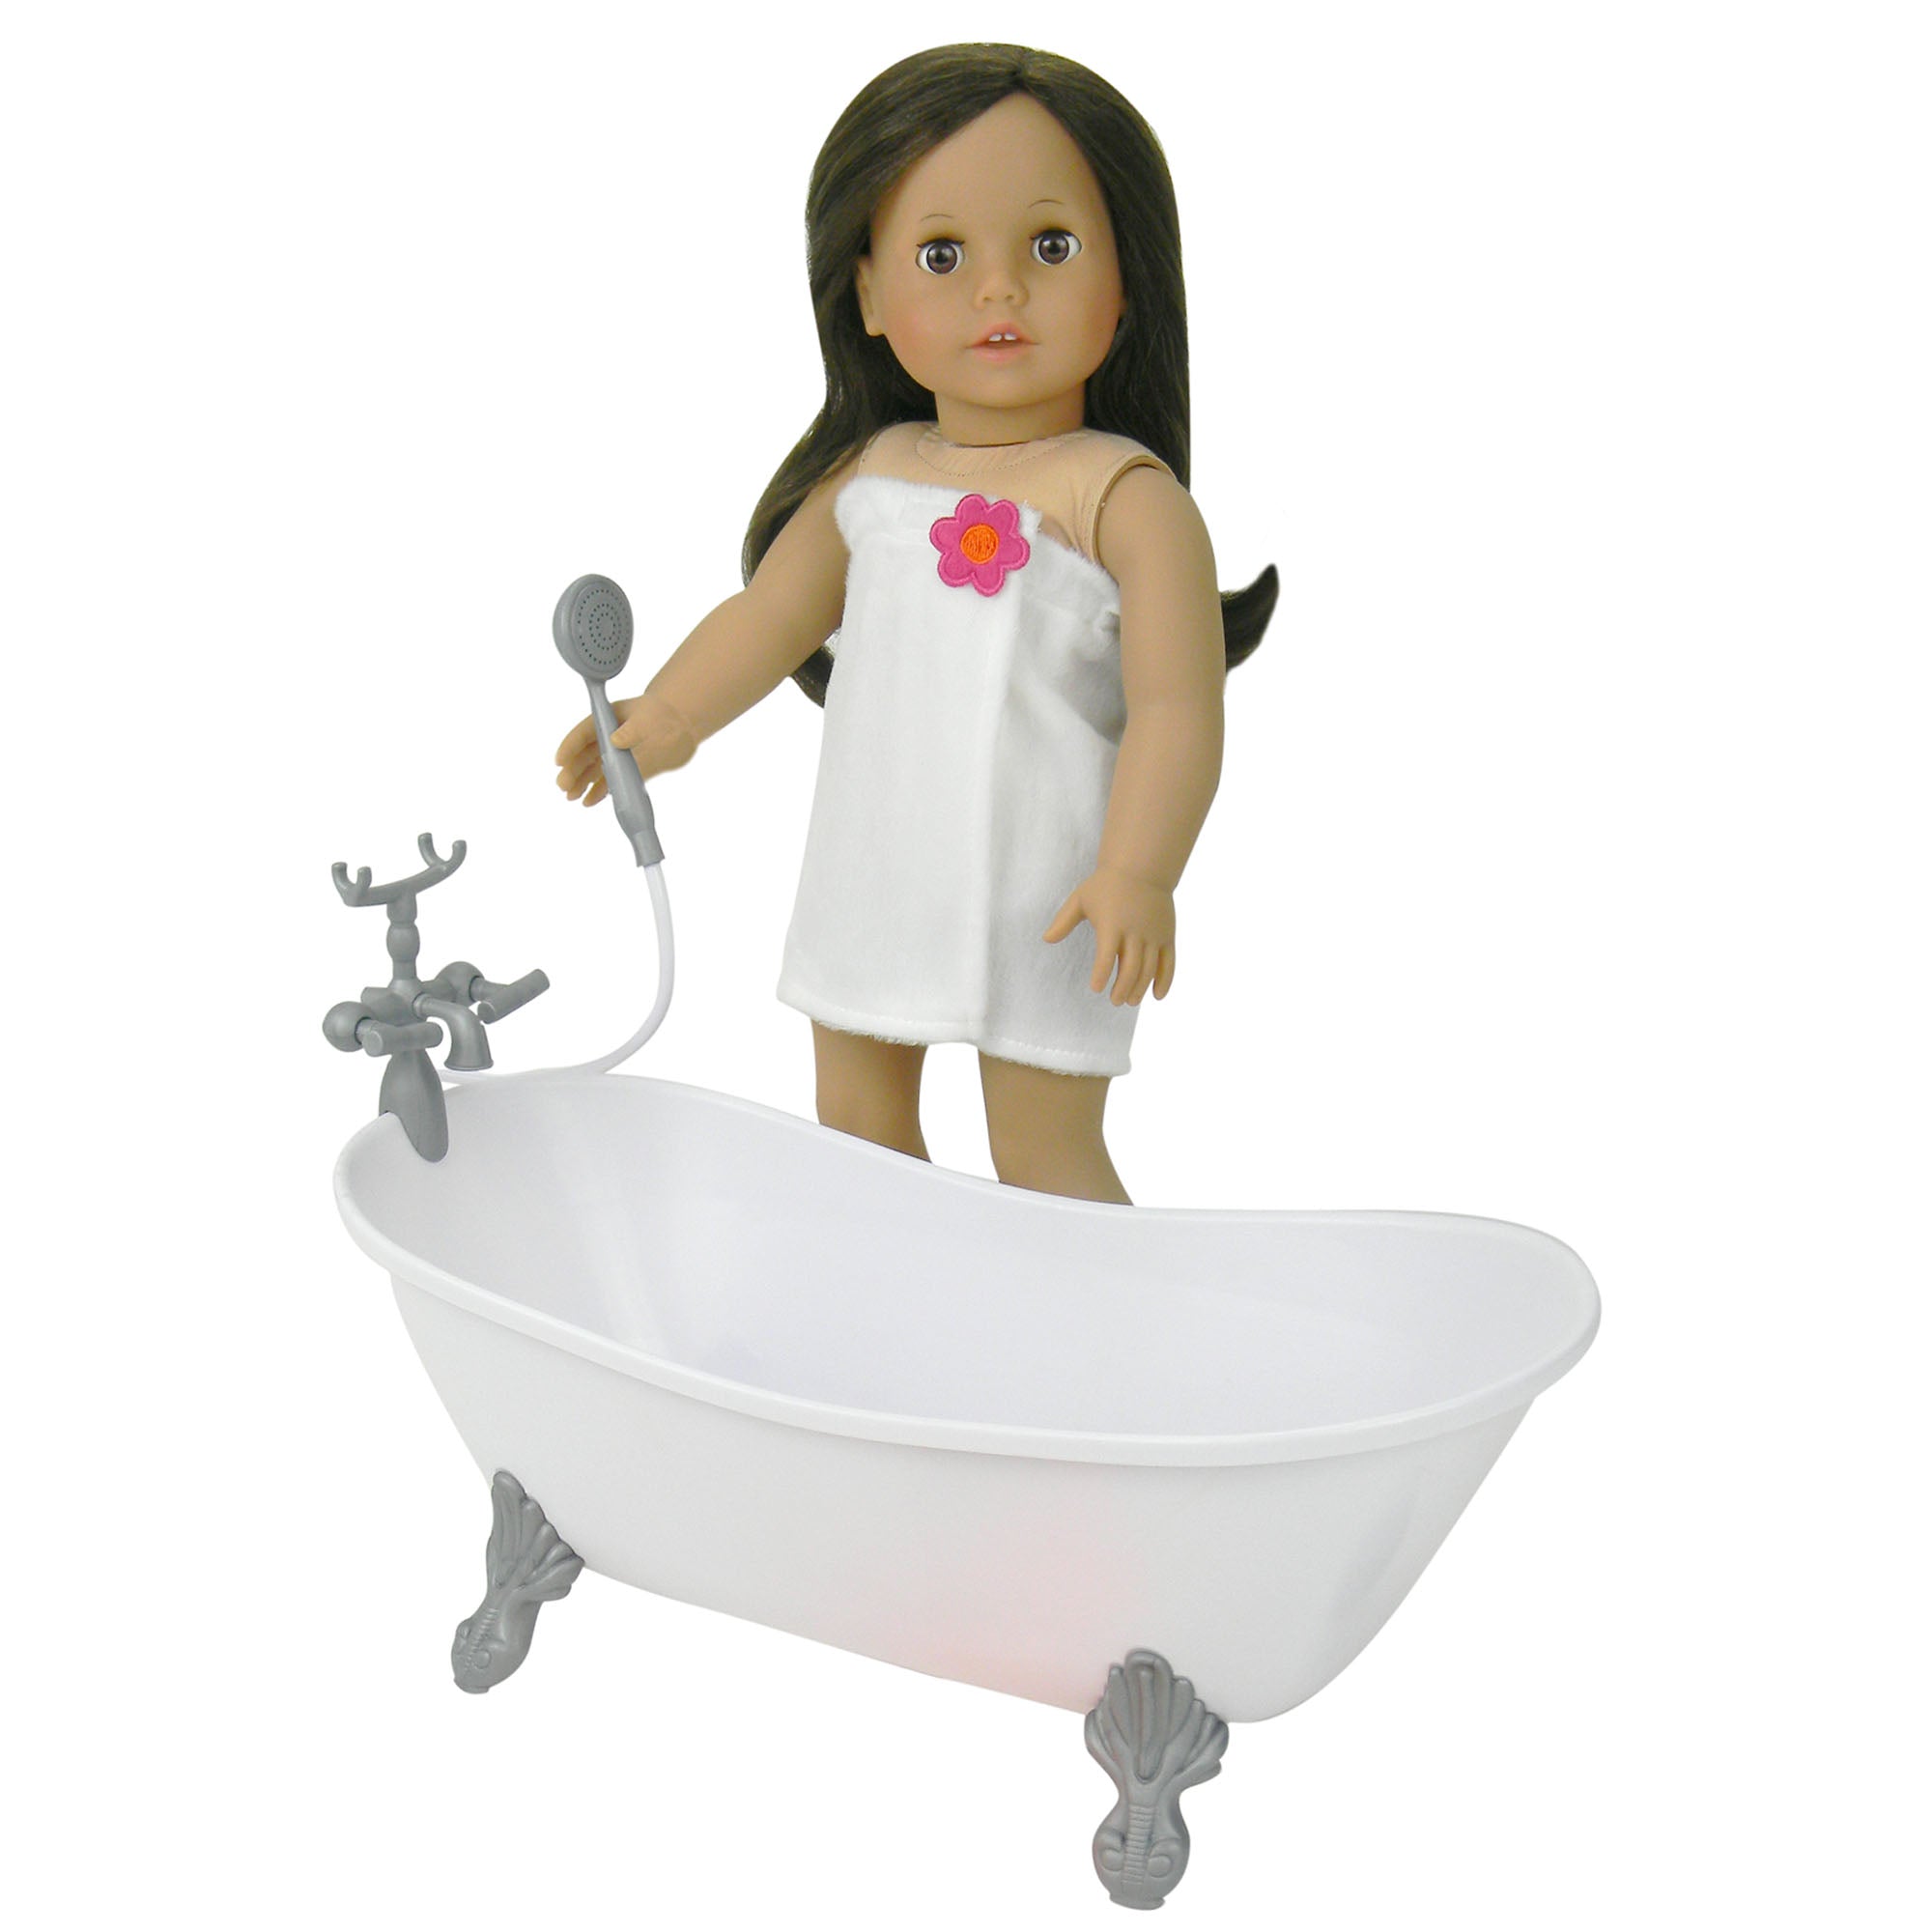 Sophia’s Classic Clawfoot Bathtub Pretend Furniture for 18" Doll